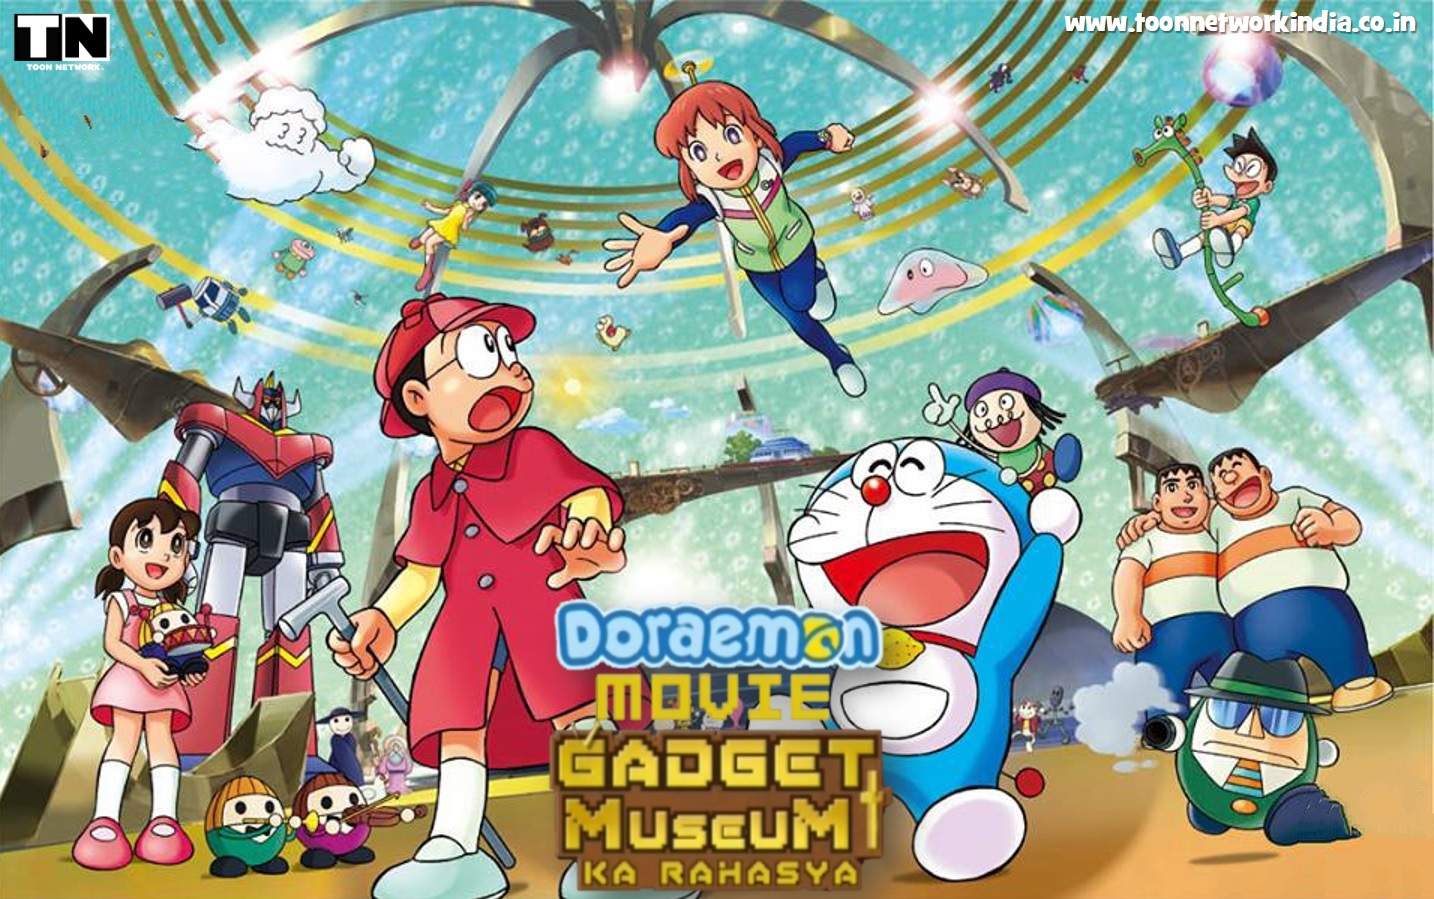 Doraemon movie super galaxy express in hindi download torrent download